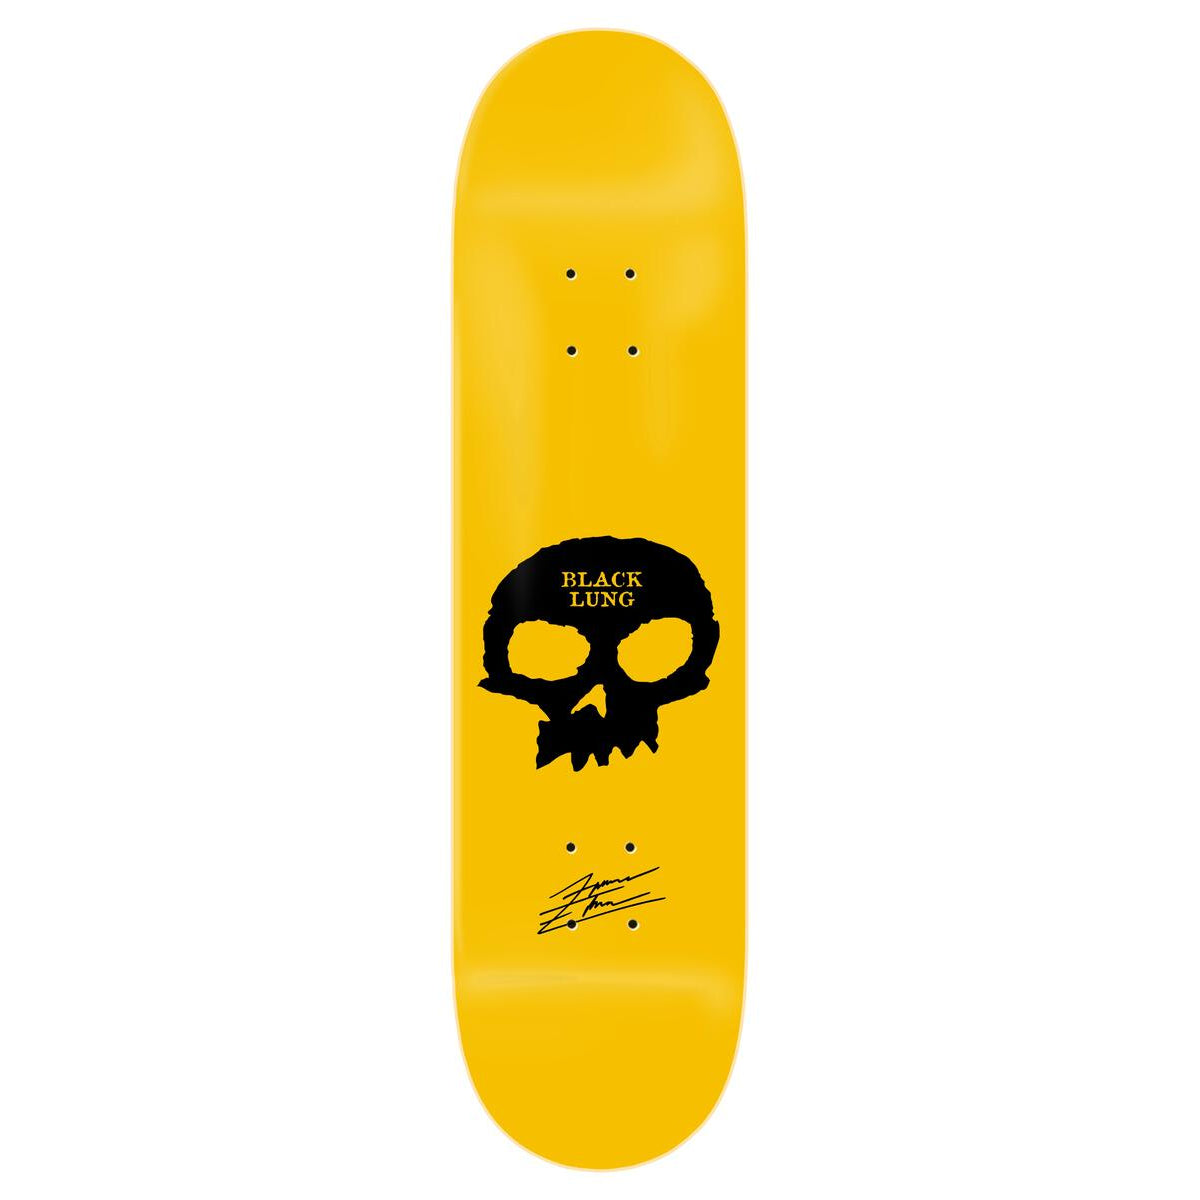 Forrest Edwards Black Lung Signature Skulls Zero Skateboard Deck